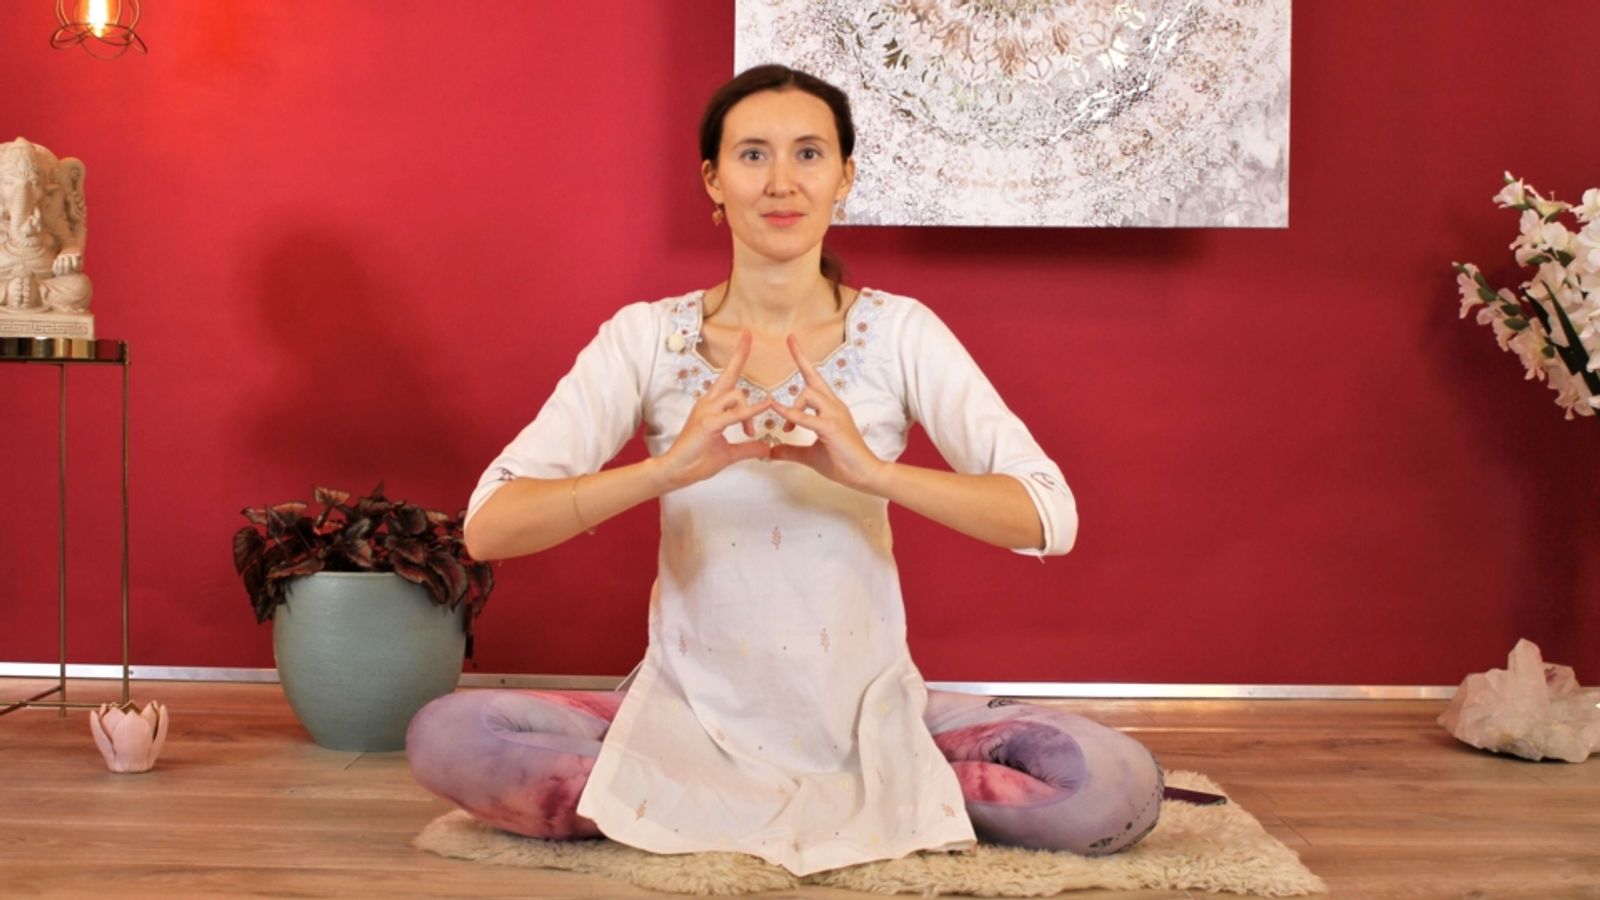 How do I meditate? - Meditation explained, with practice